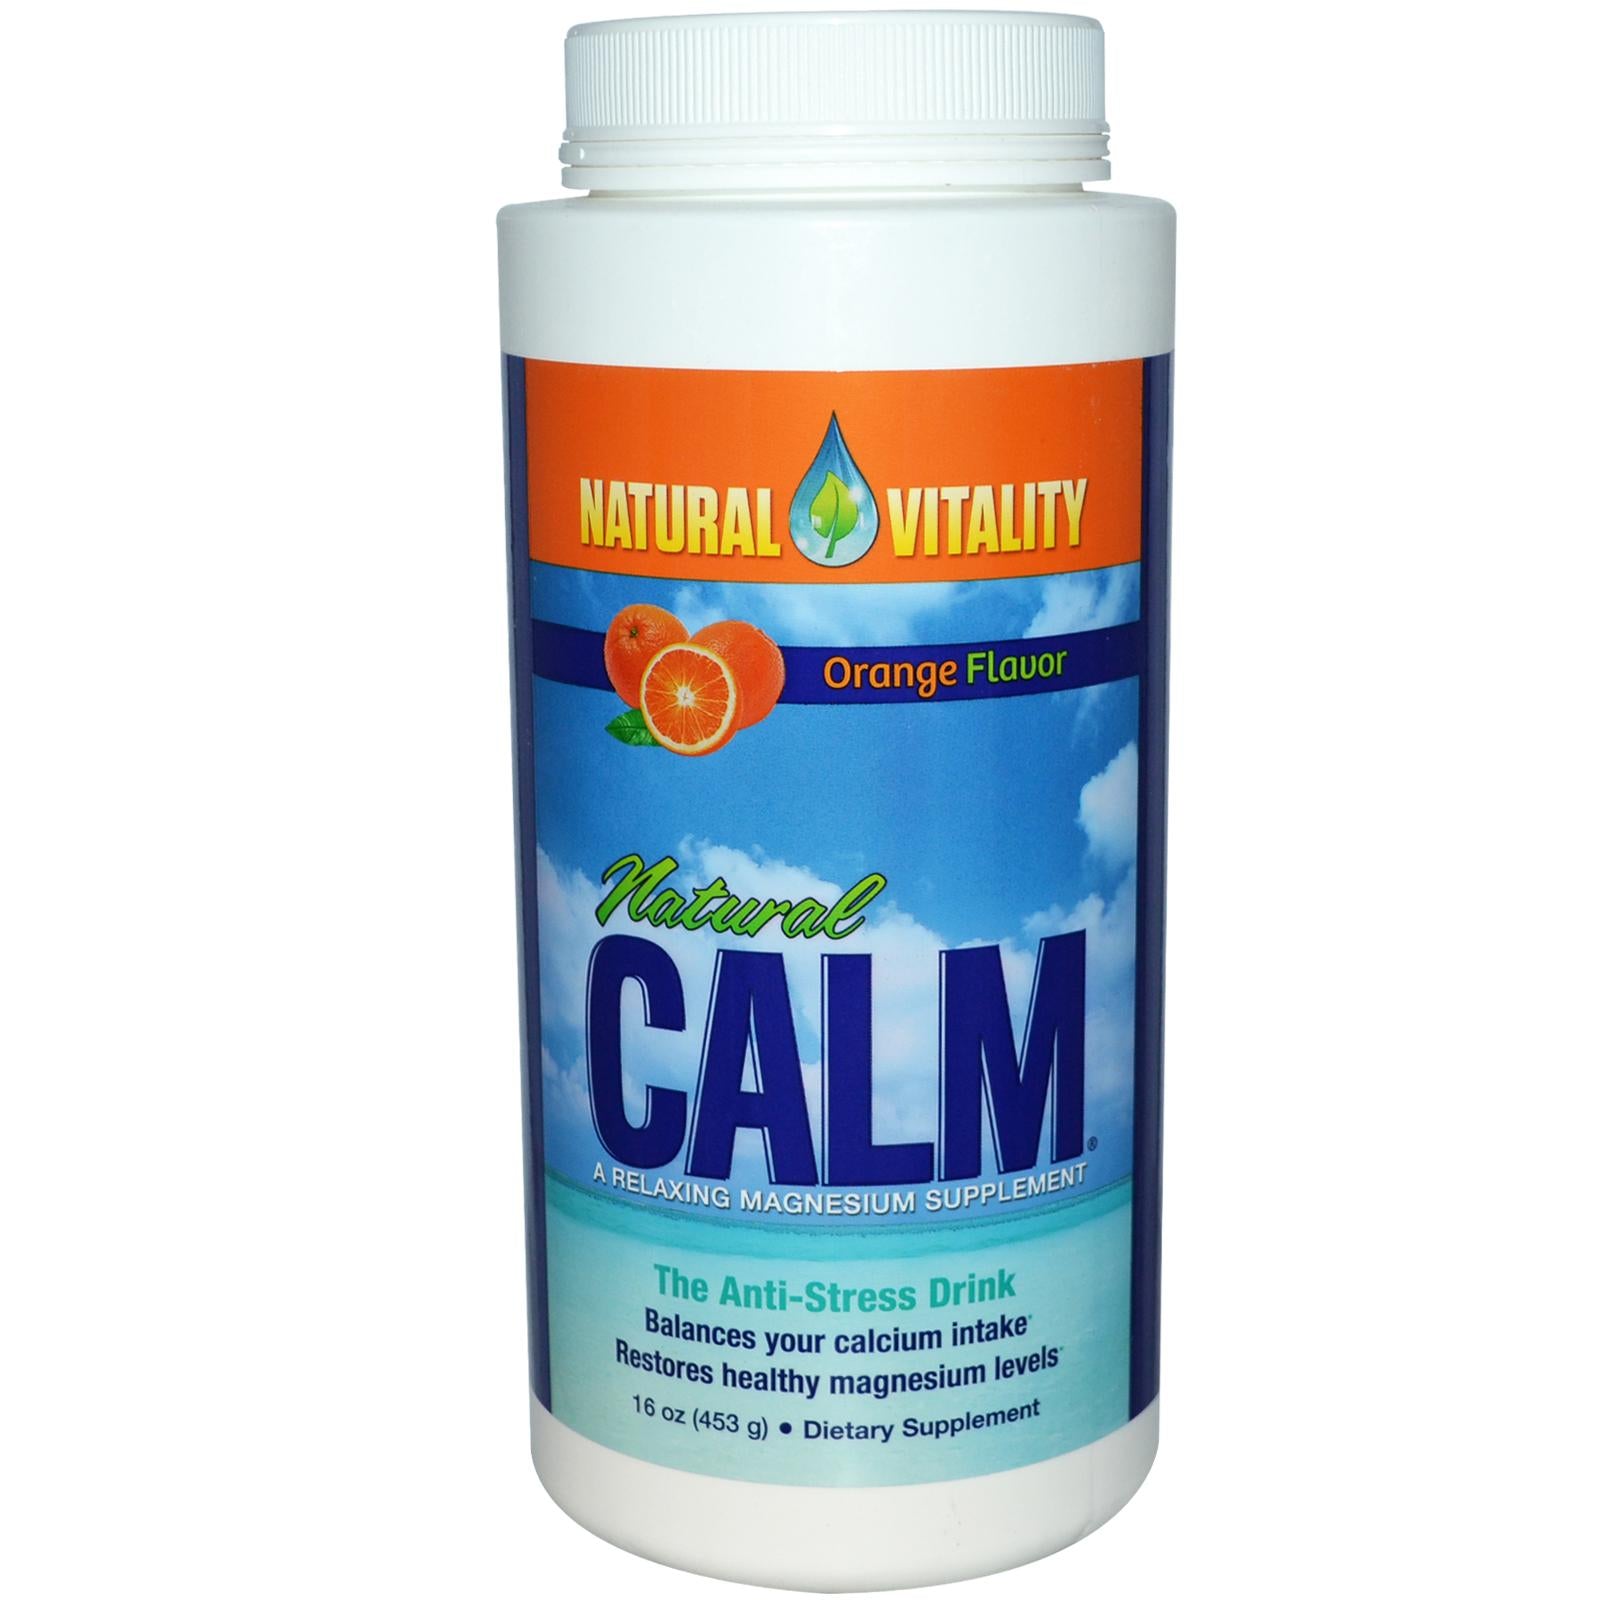 Natural Vitality Calm Anti-Stress Drink, Orange Flavor